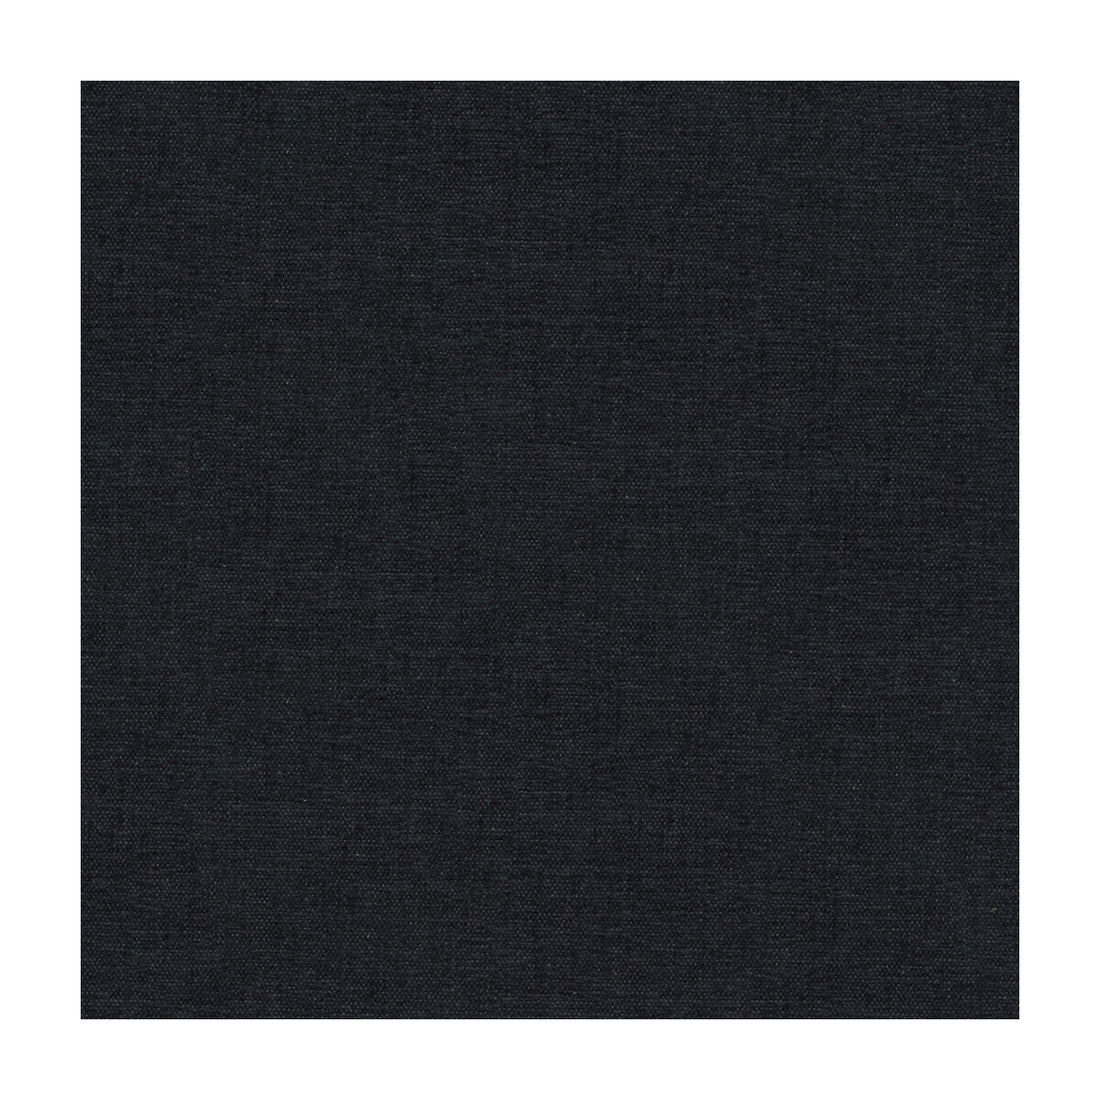 Kravet Smart fabric in 33902-821 color - pattern 33902.821.0 - by Kravet Smart